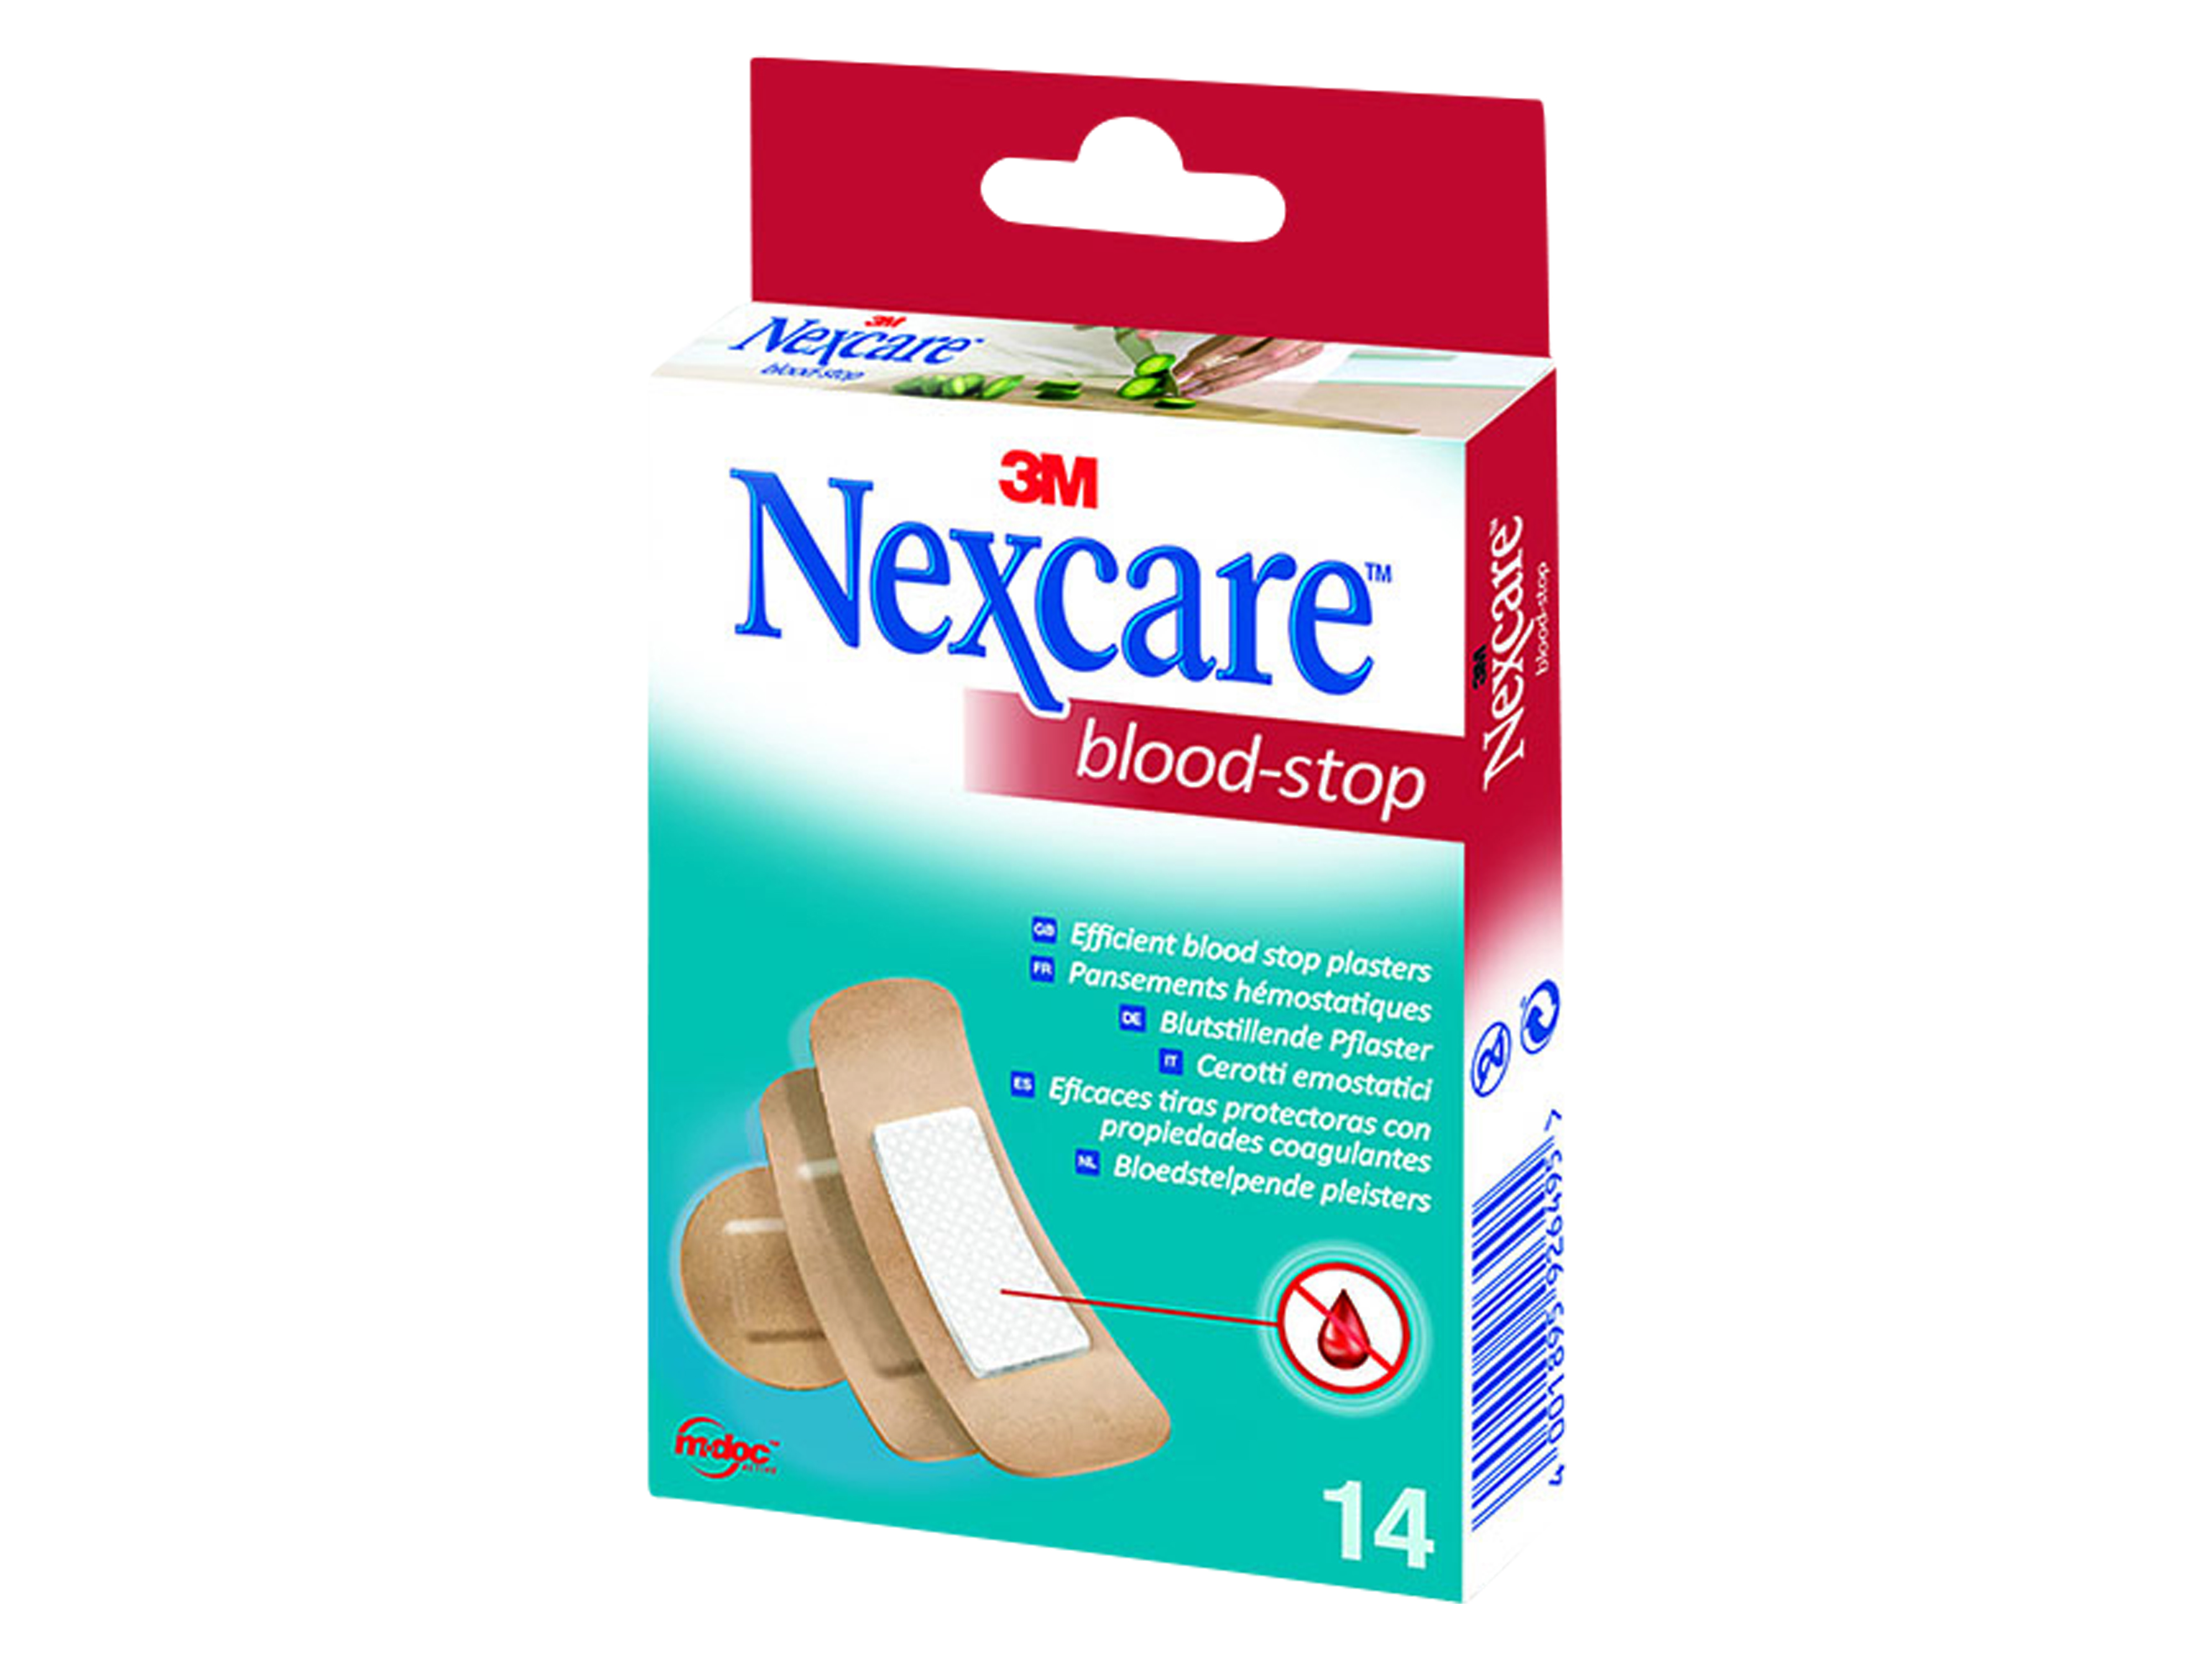 Nexcare Blood-stop plaster, 14 stk.